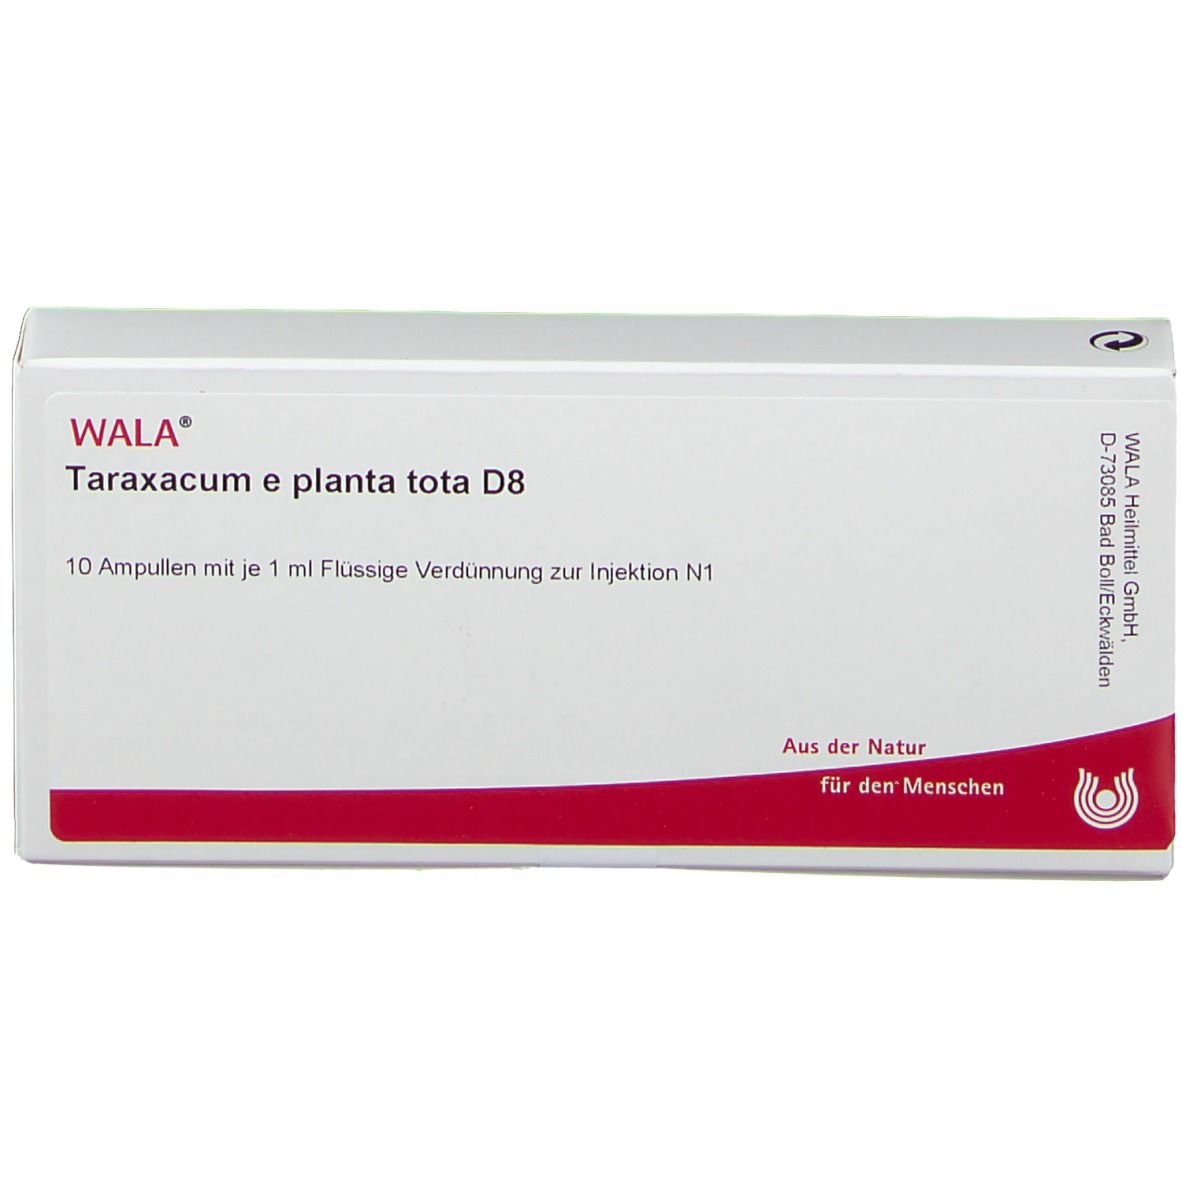 WALA® Taraxacum e planta tota D 8